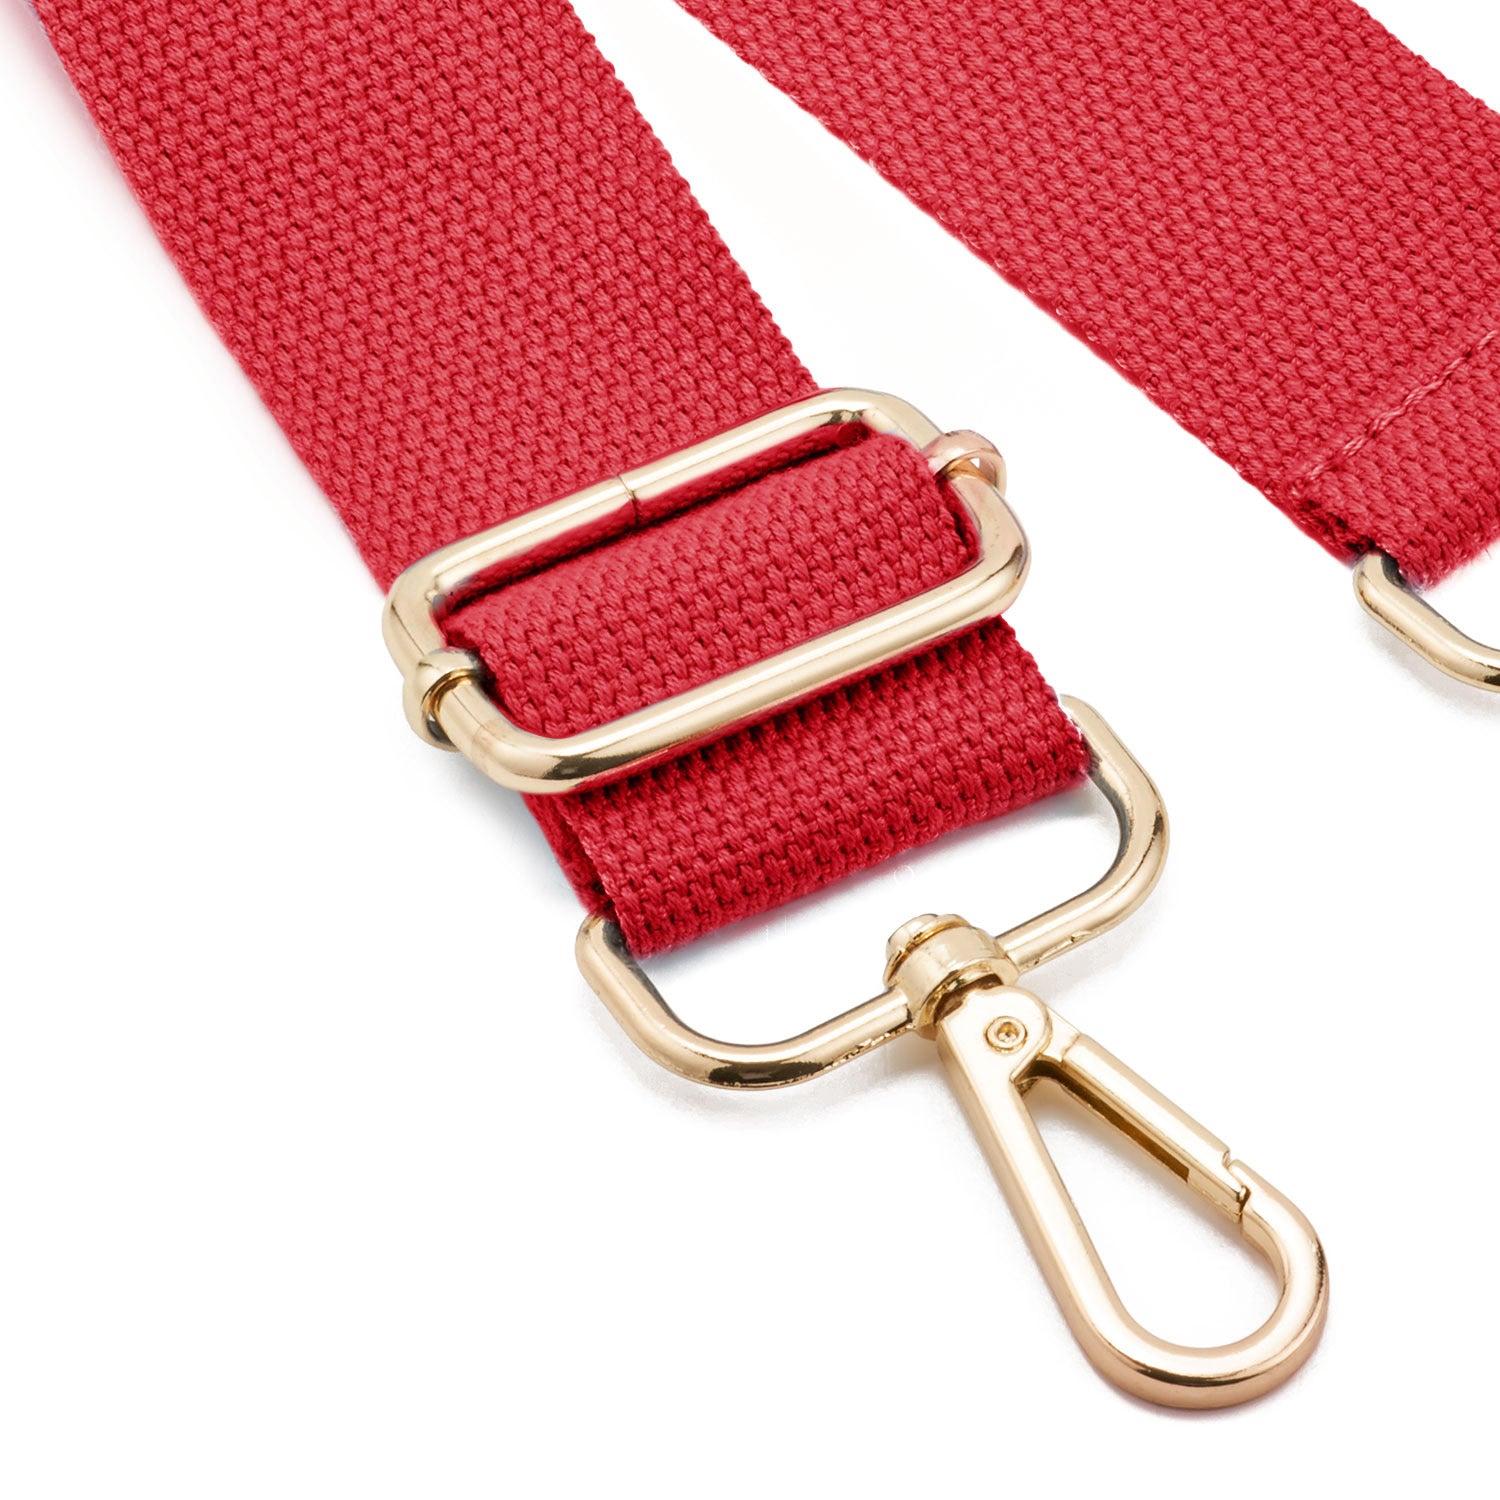  Ancient Gold Chain Strap Shoulder Cross Body Bag Handbag Purse Replacement  Chain Strap Set Wide 0.7 cm (Length 31)